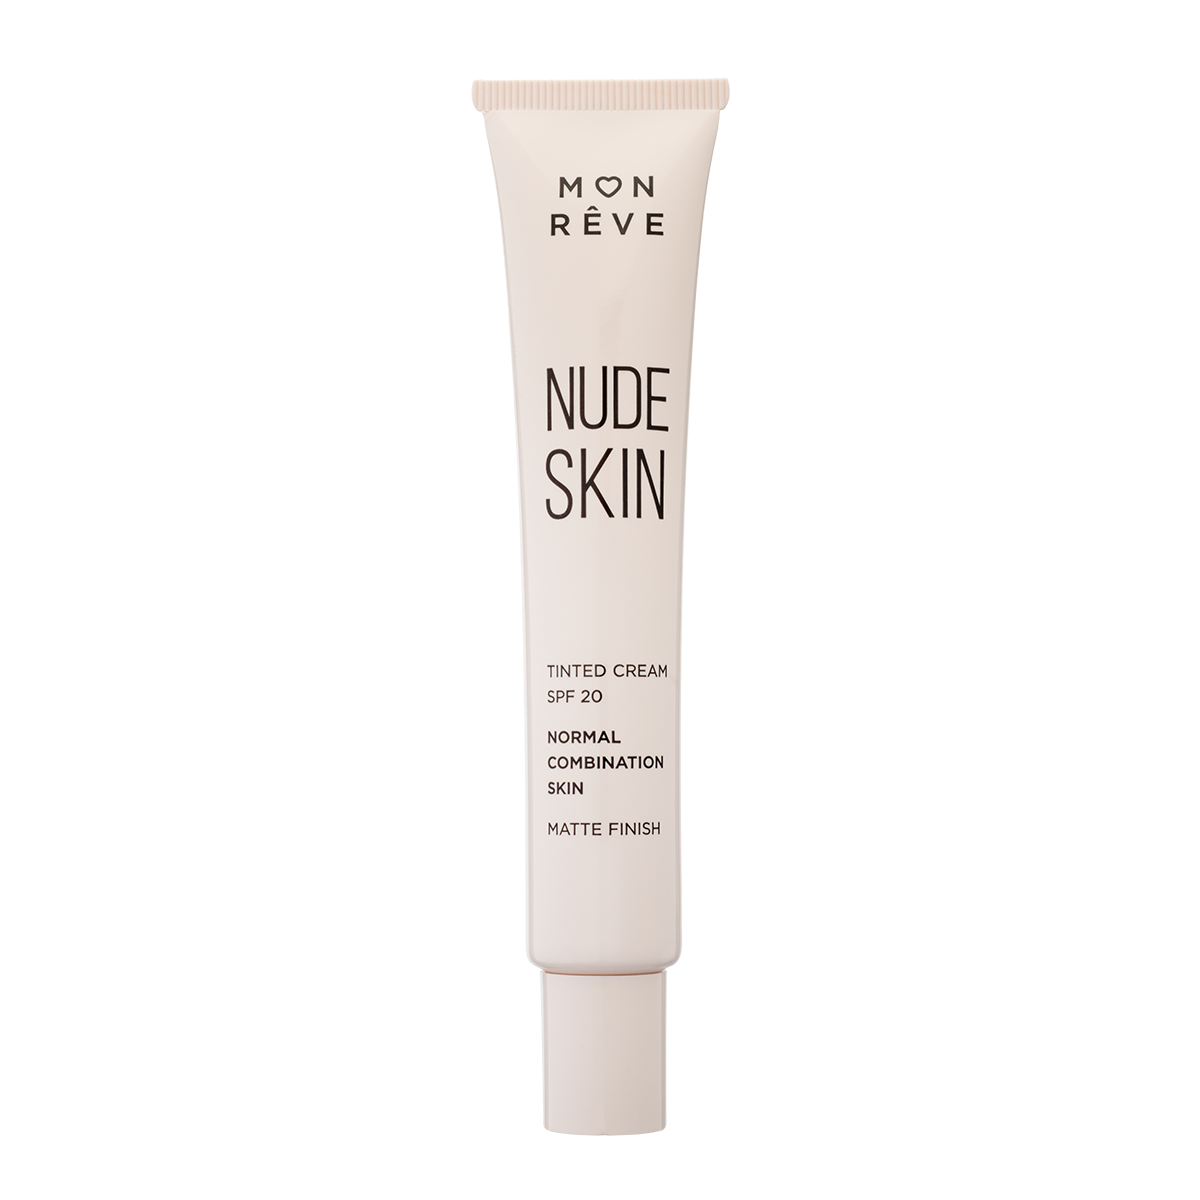 Mon Reve Nude Skin Combination-Normal Skin